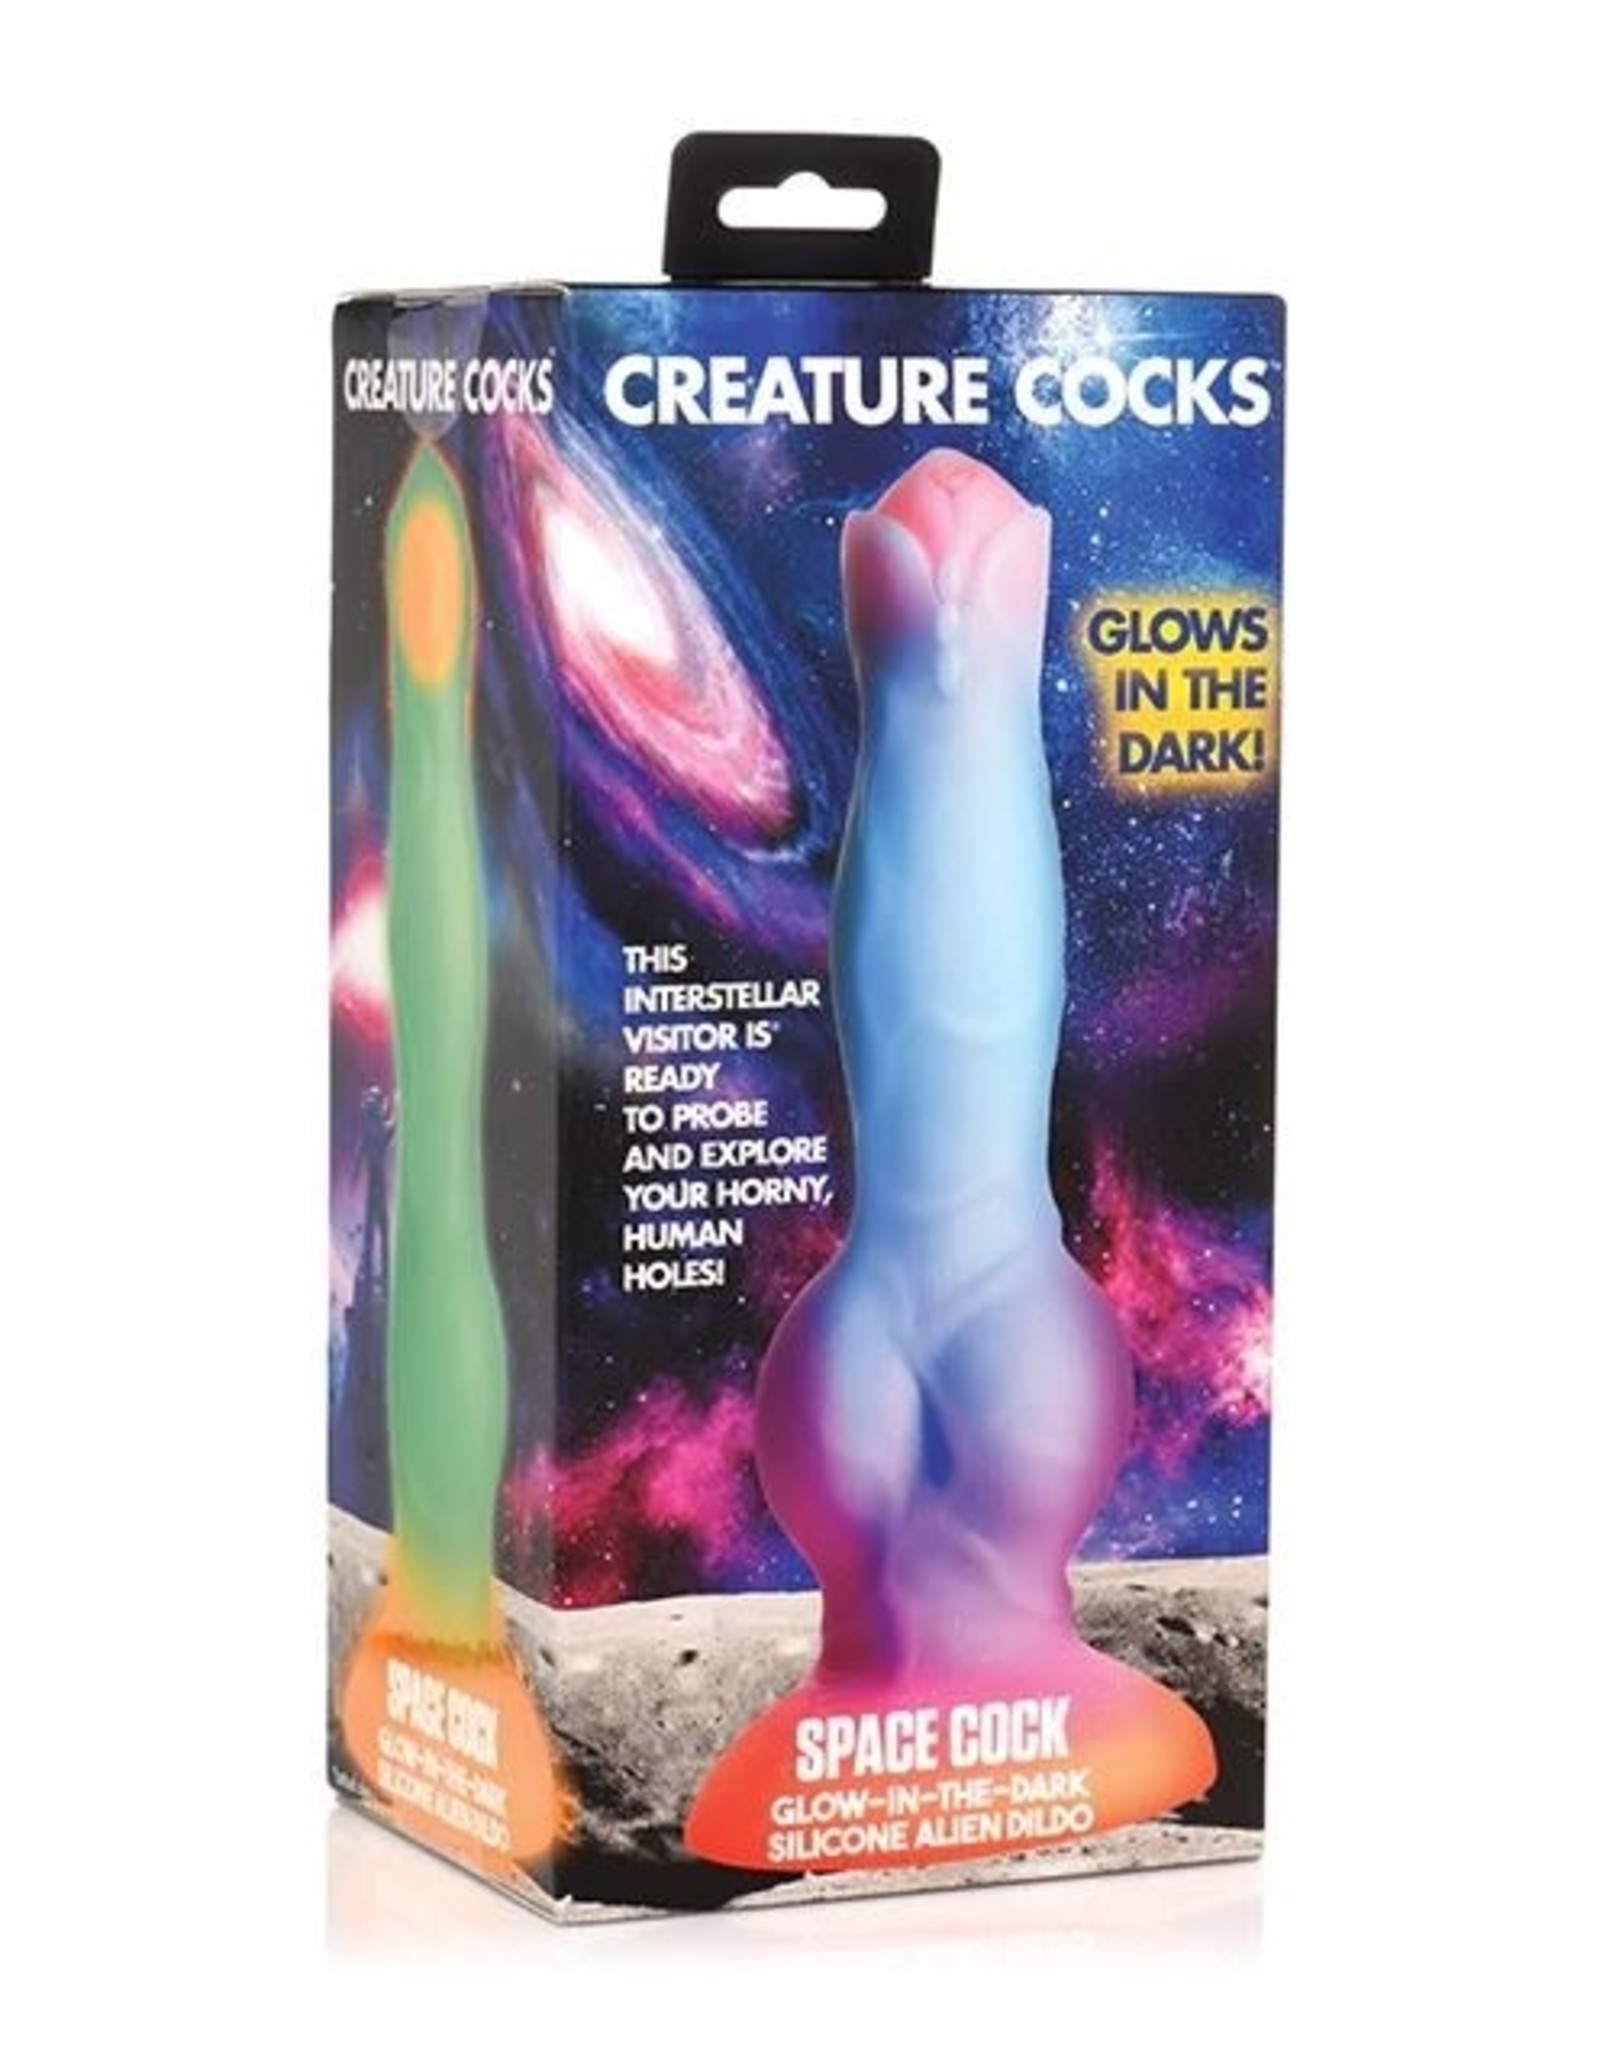 XR Brands Creature Cocks - Glow in the Dark  Space Cock Alien Dildo